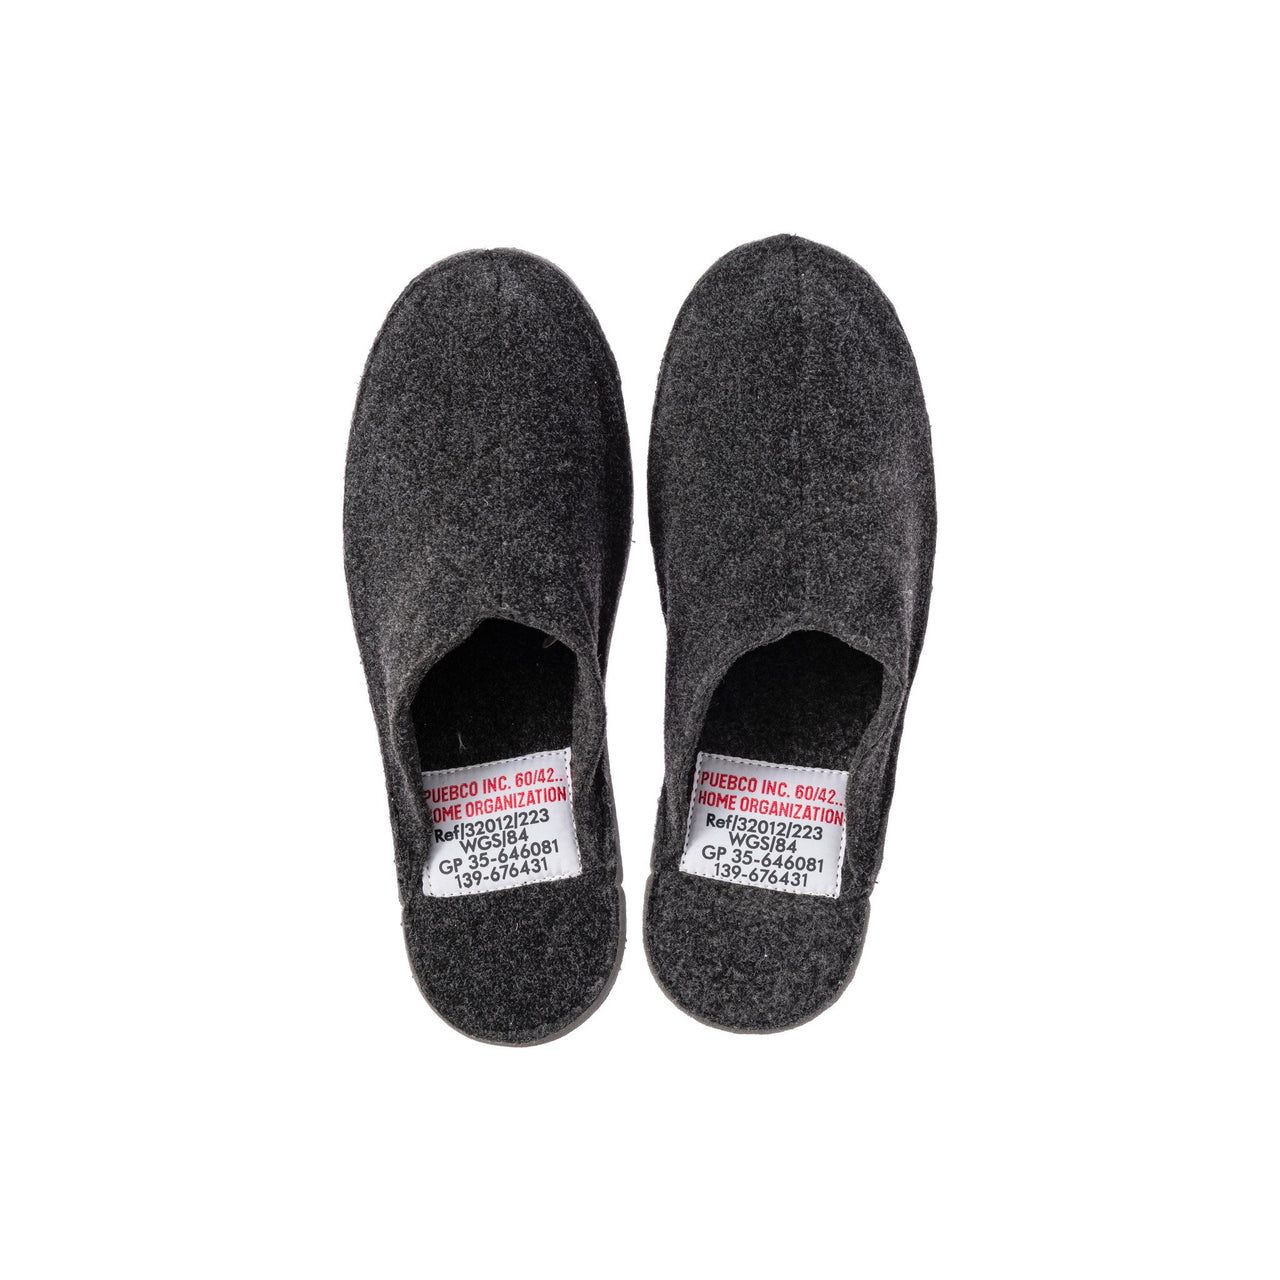 Slippers - Large/Dark Gray